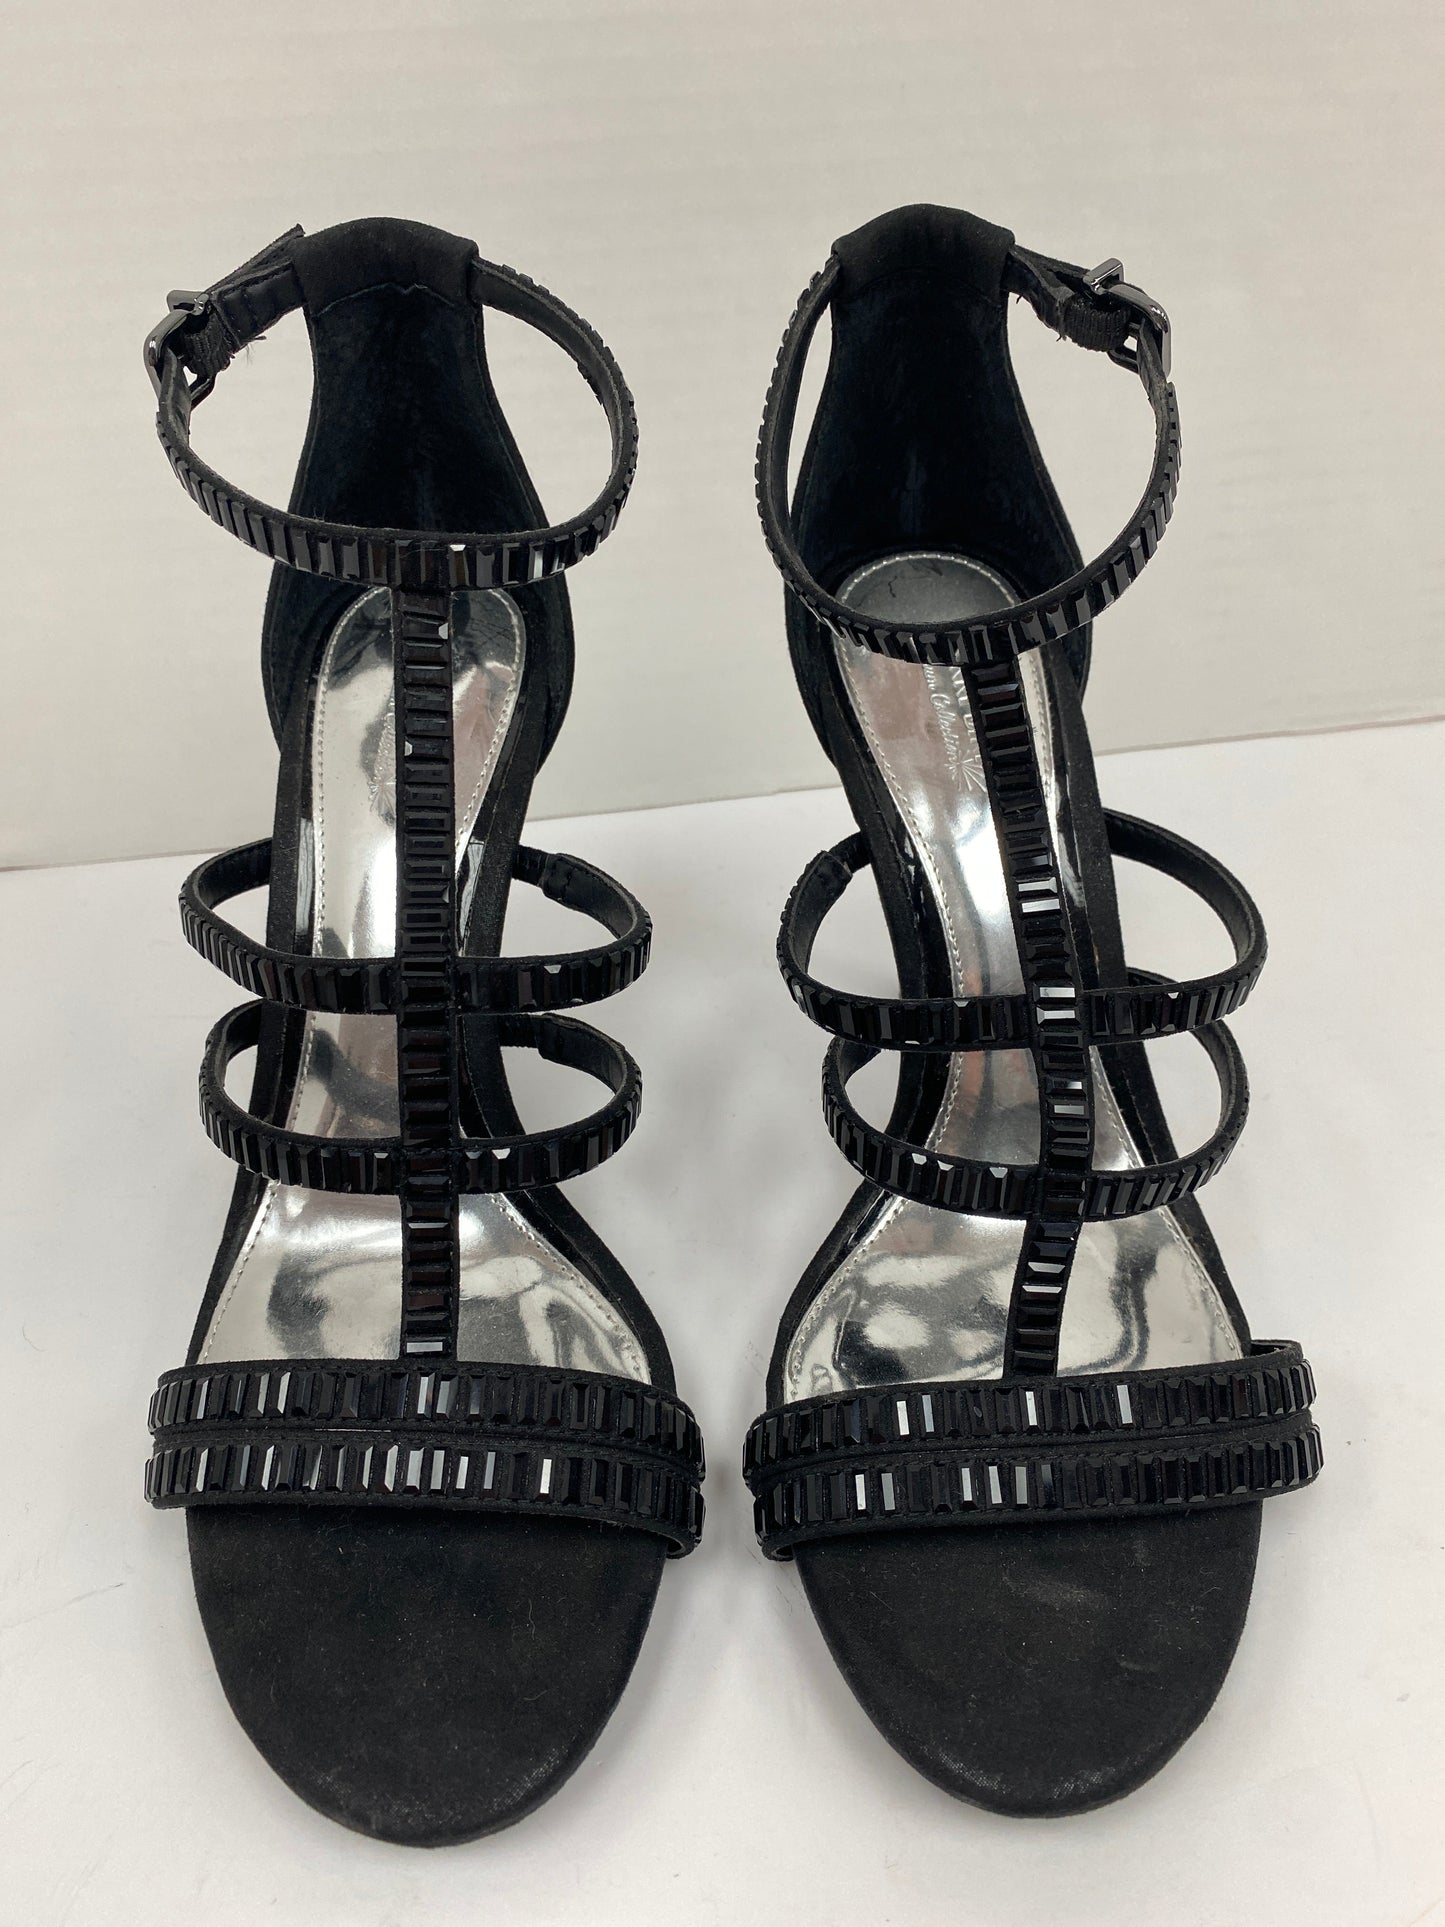 Black Shoes Heels Stiletto Gianni Bini, Size 8.5